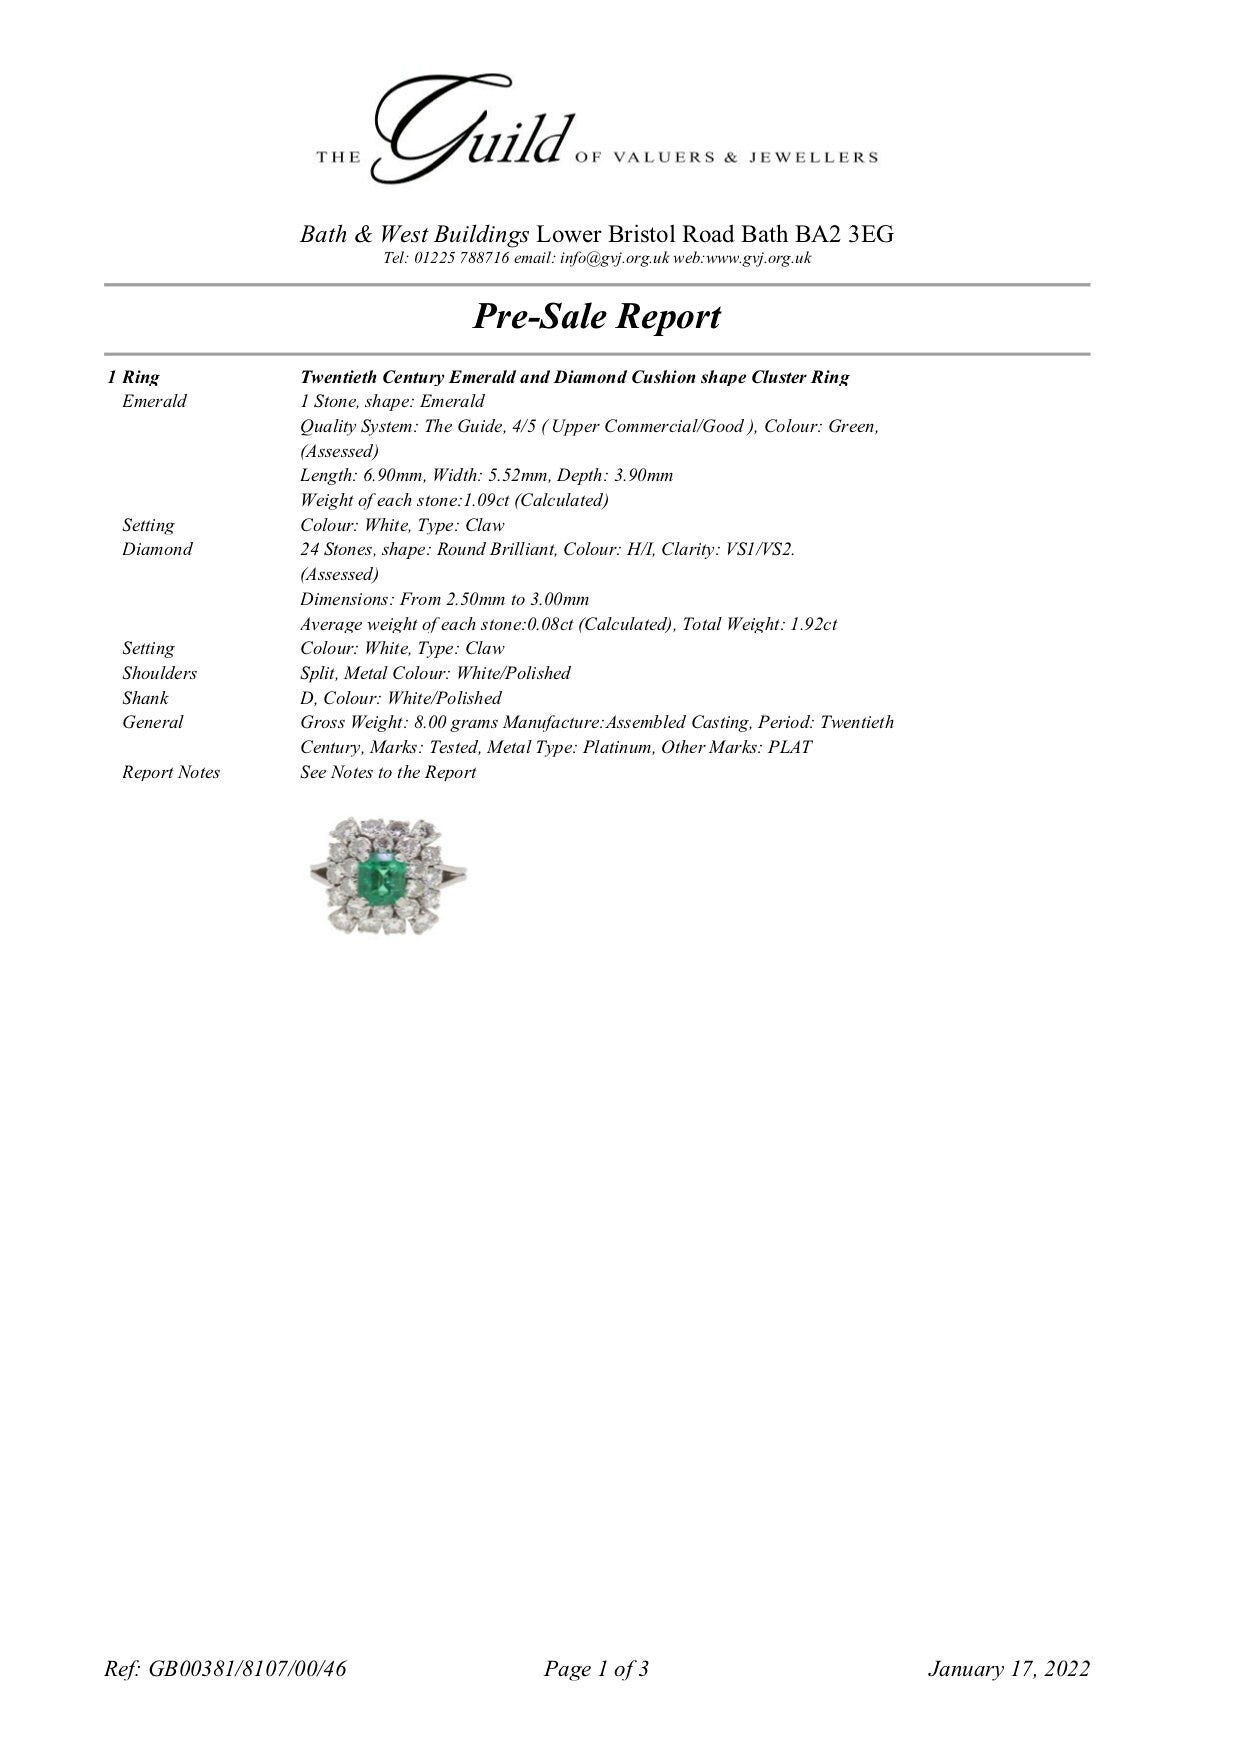 Magnificent Vintage Platinum Emerald & Diamond cluster ring ~ Independent report - valuation